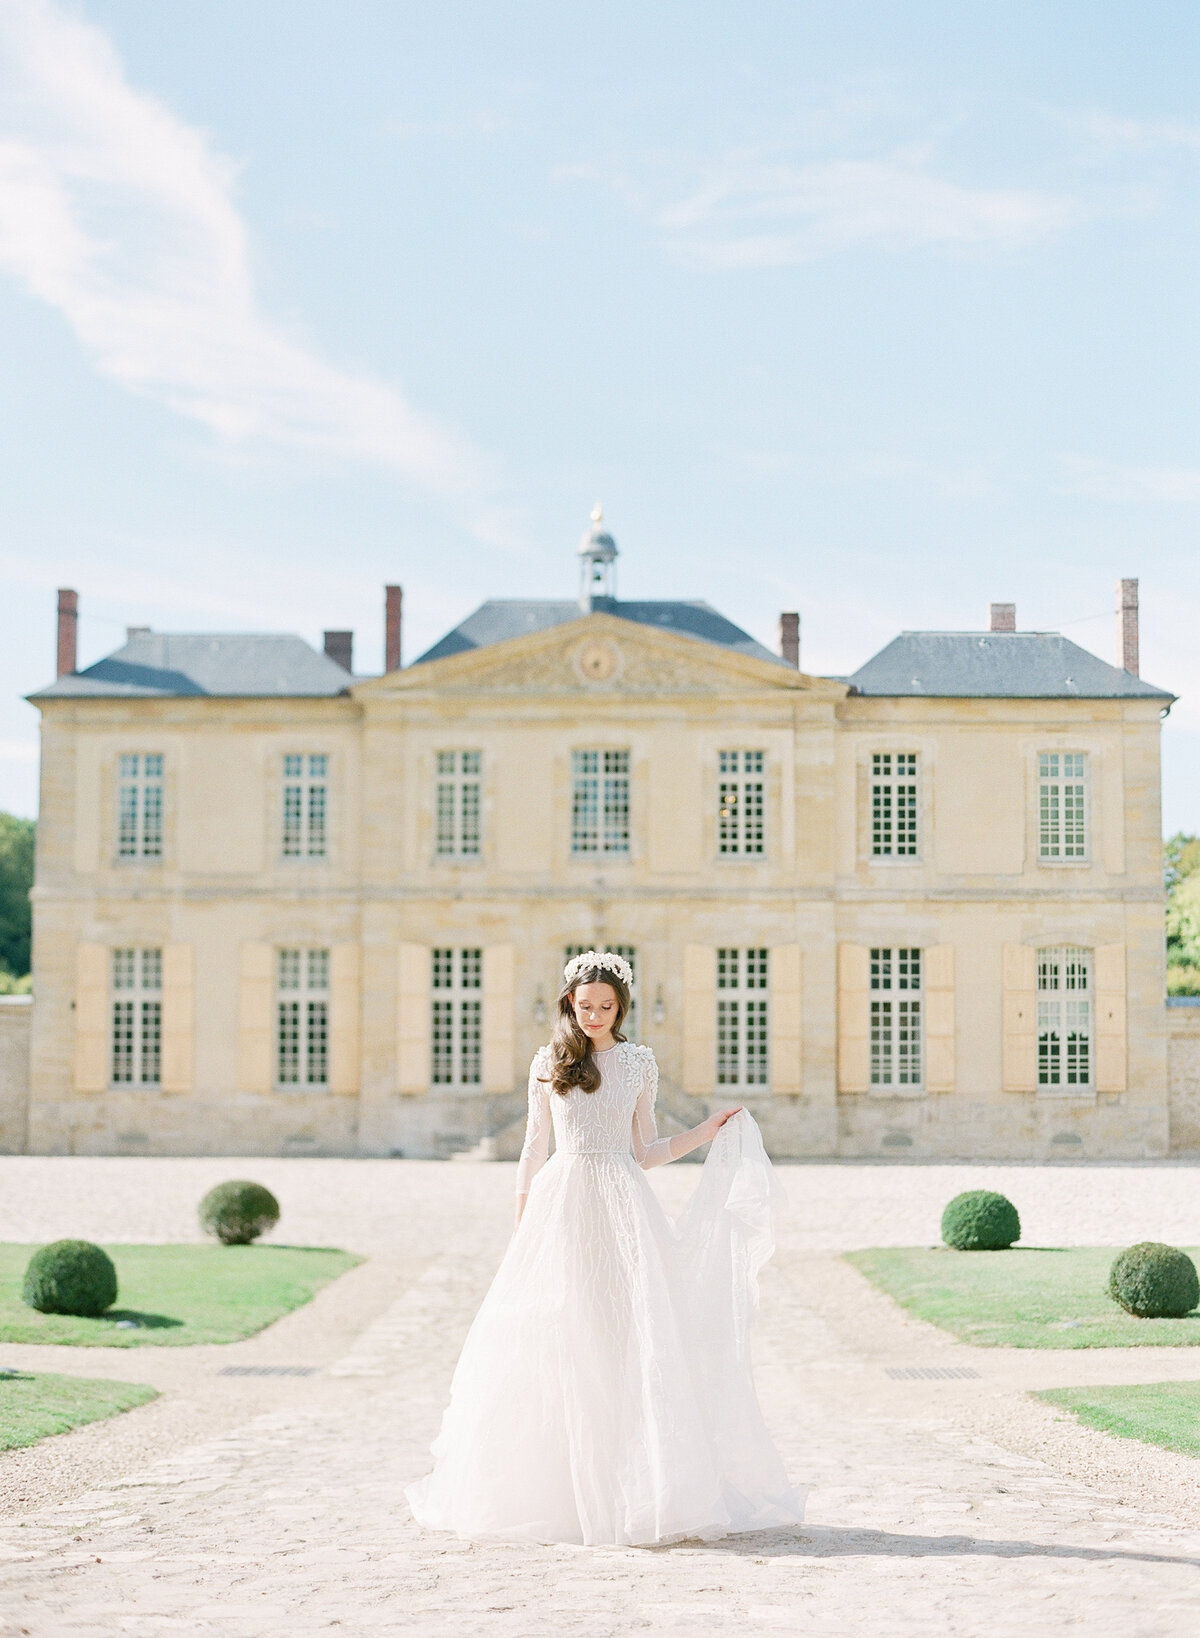 Château wedding near Paris, France